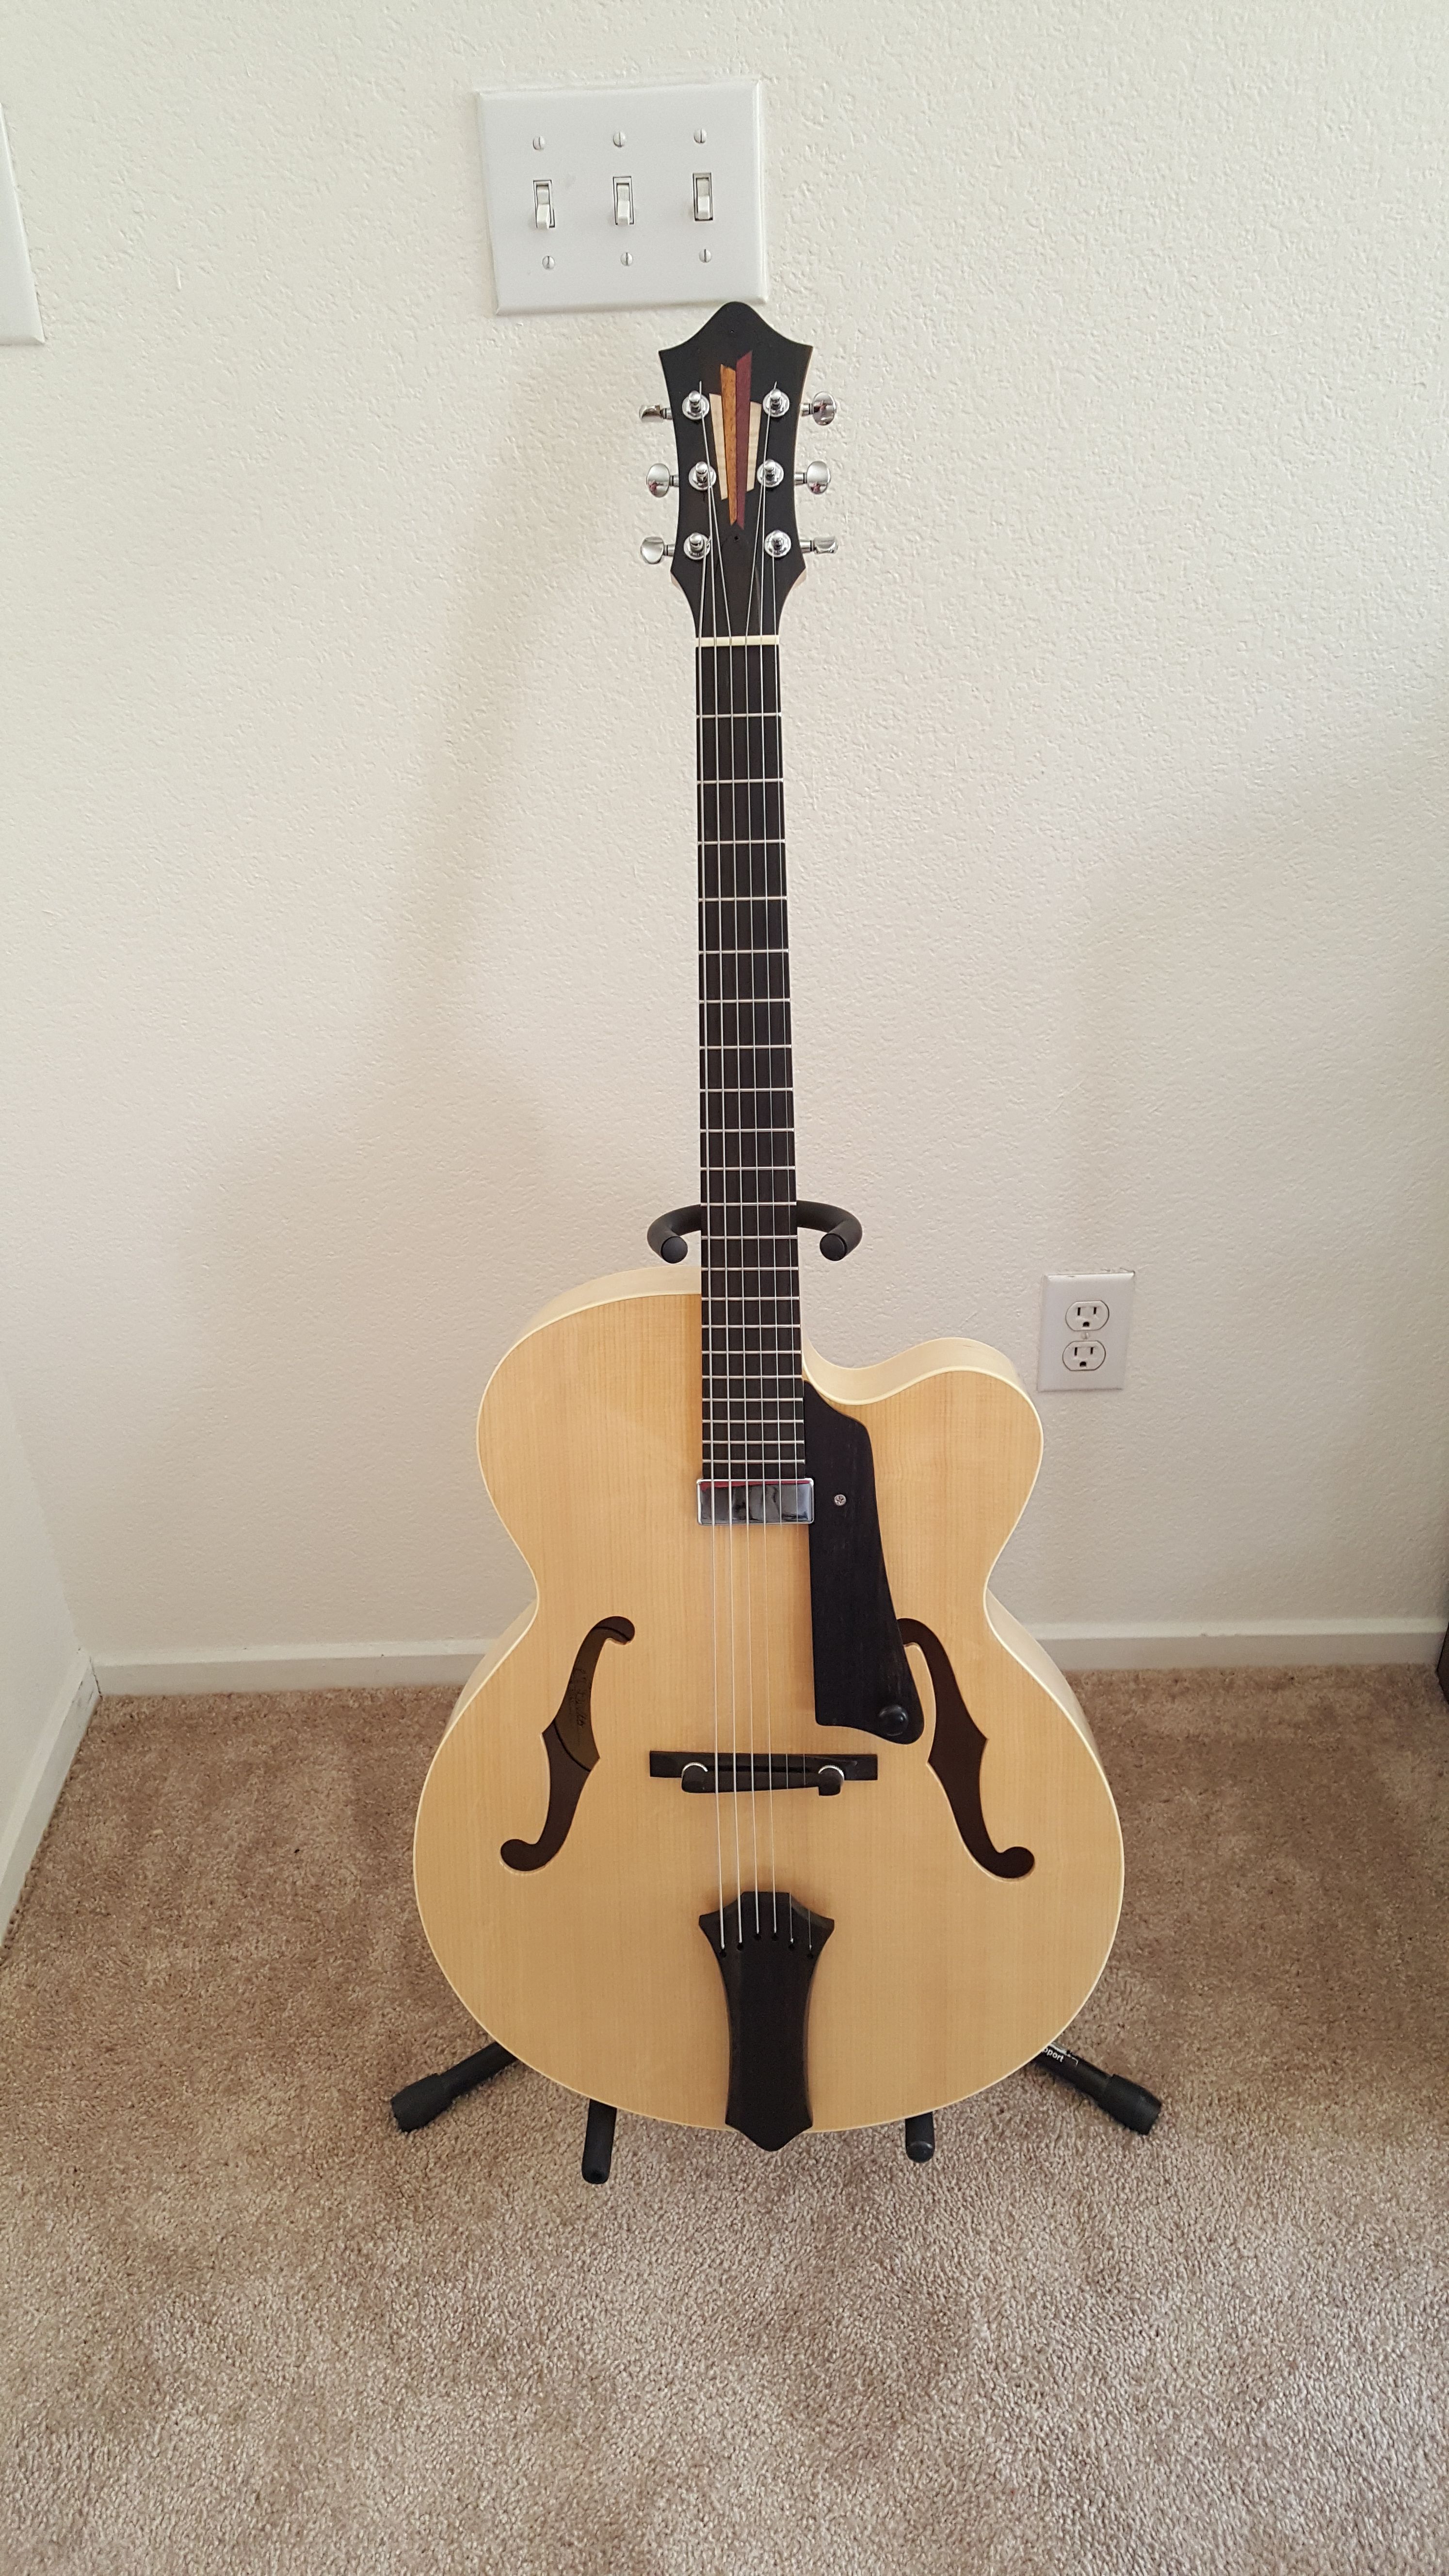 Galloup custom archtop guitar